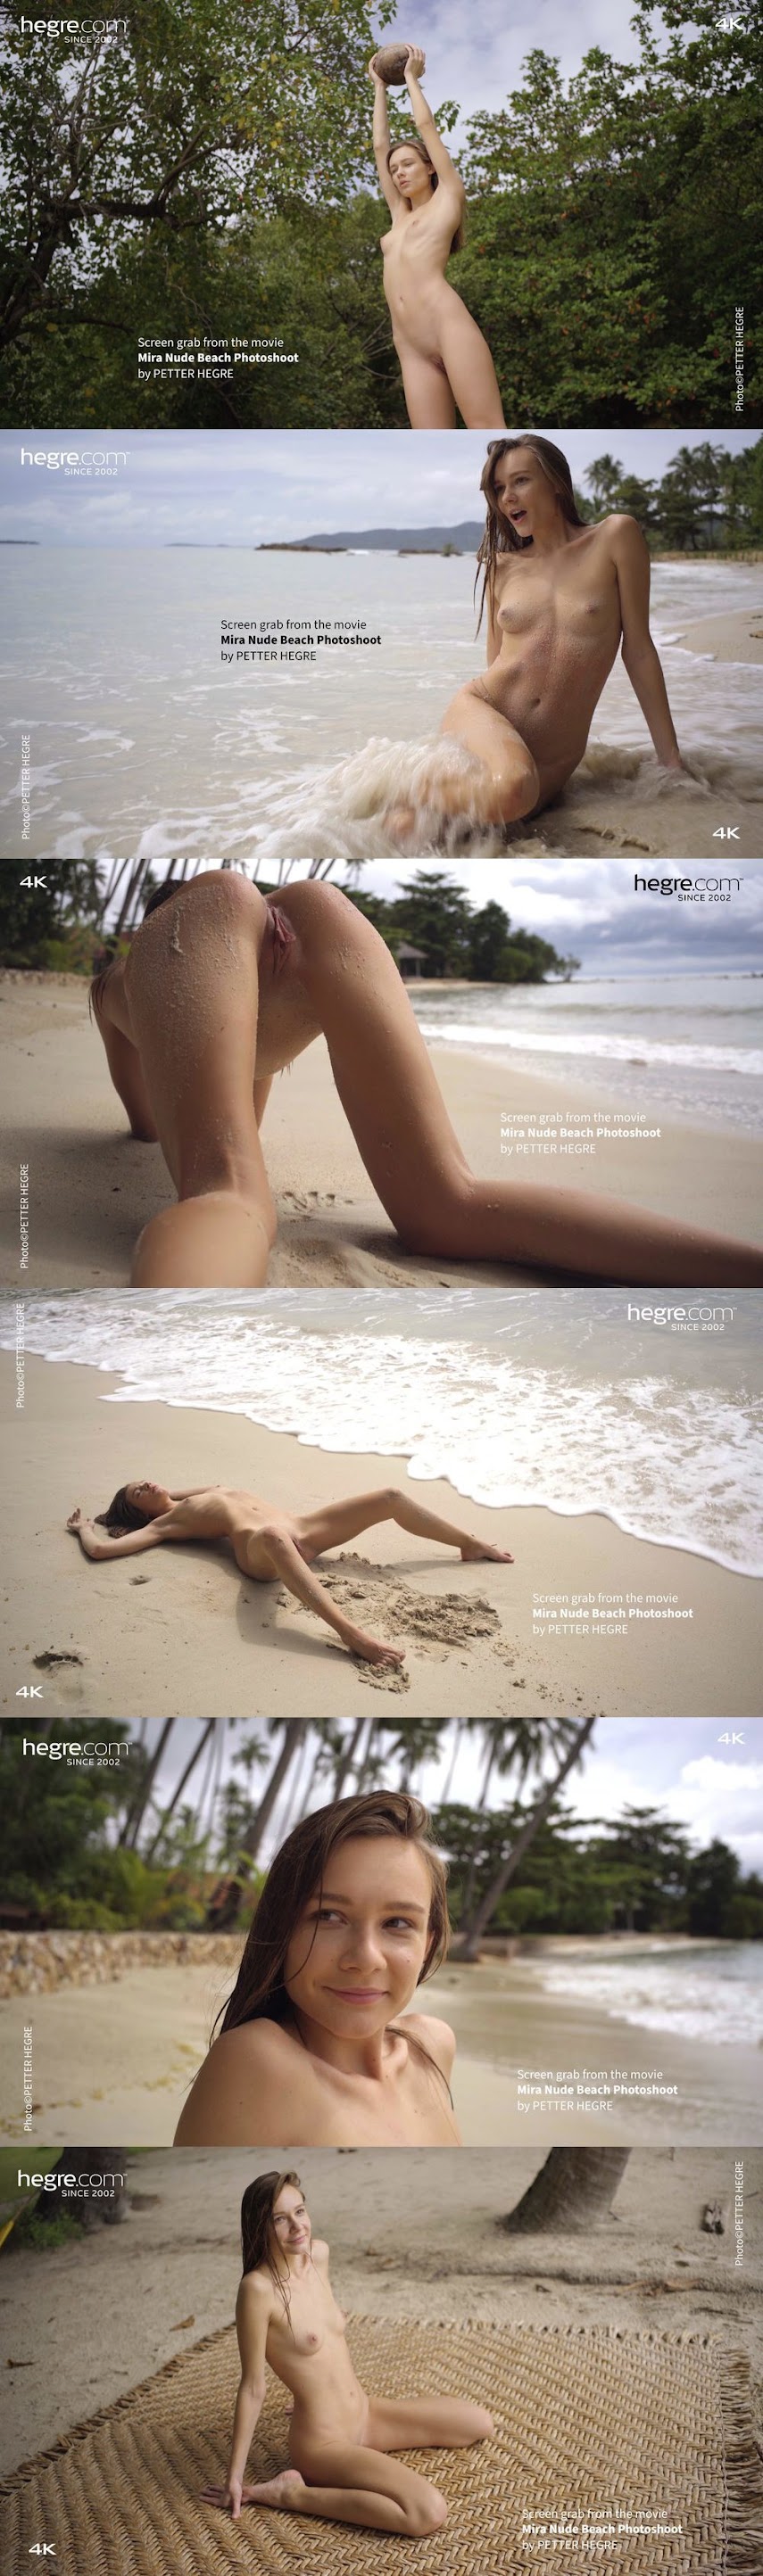 mira-nude-beach-photo-shoot-1080p.mp4-jk- [Art] Mira - Nude Beach Photo Shoot